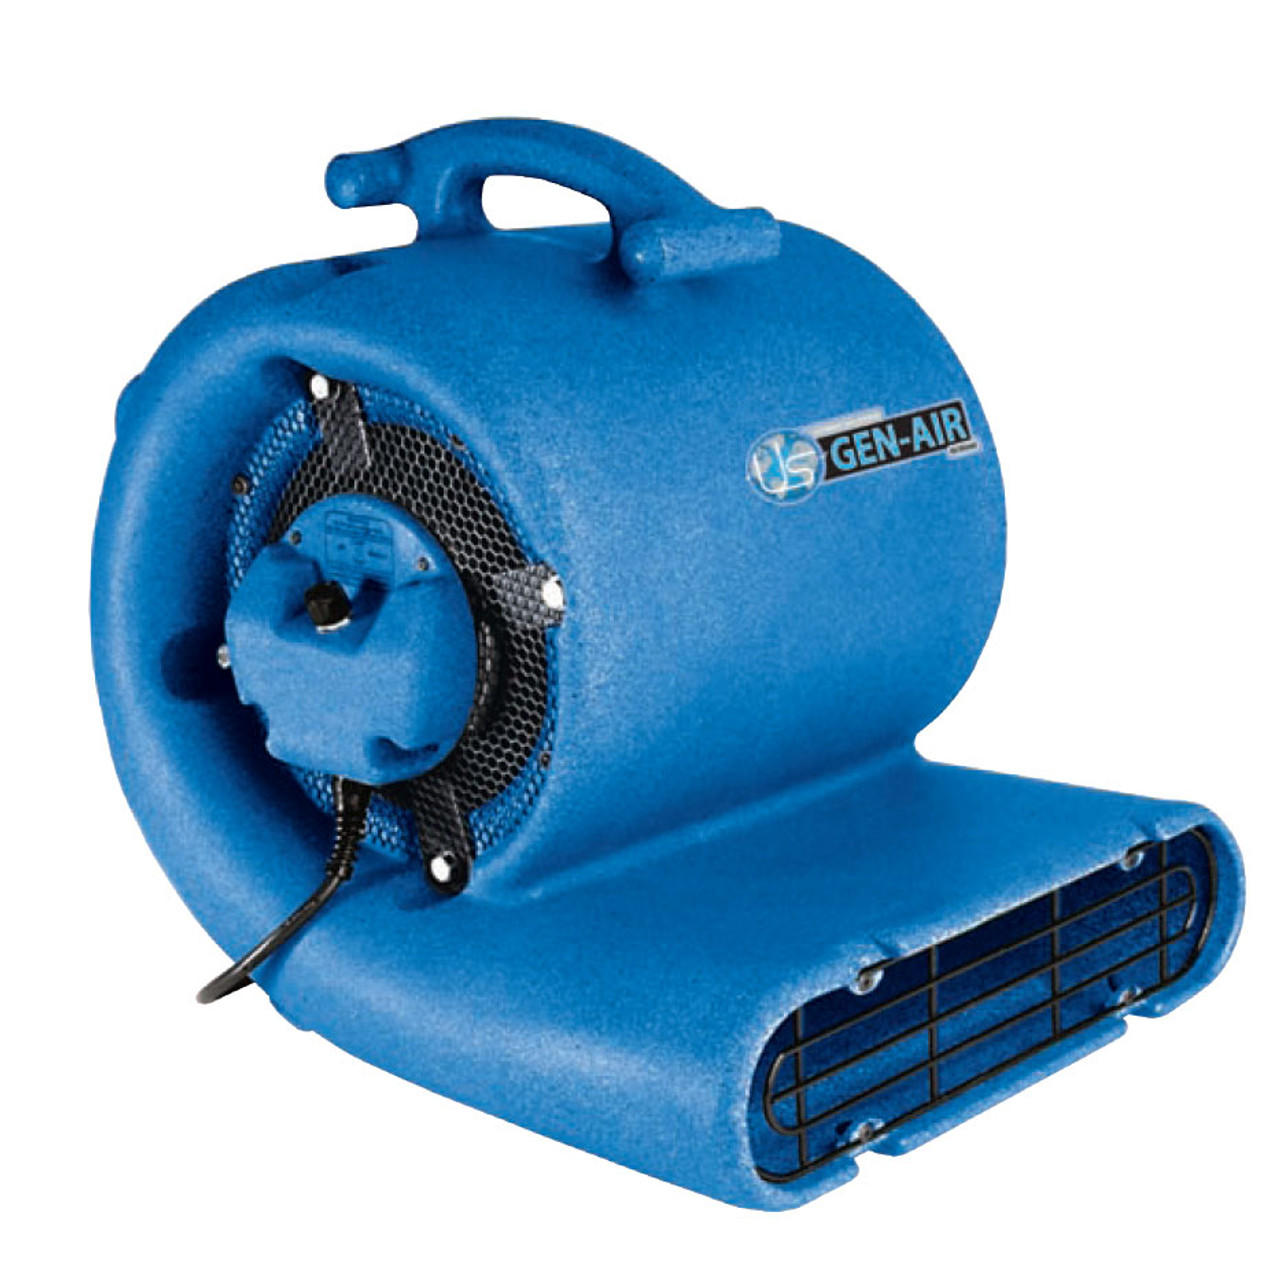 1.0 HP Air Mover Carpet Floor Dryer Blower Fan 4200 CFM Home Portable Stackable 